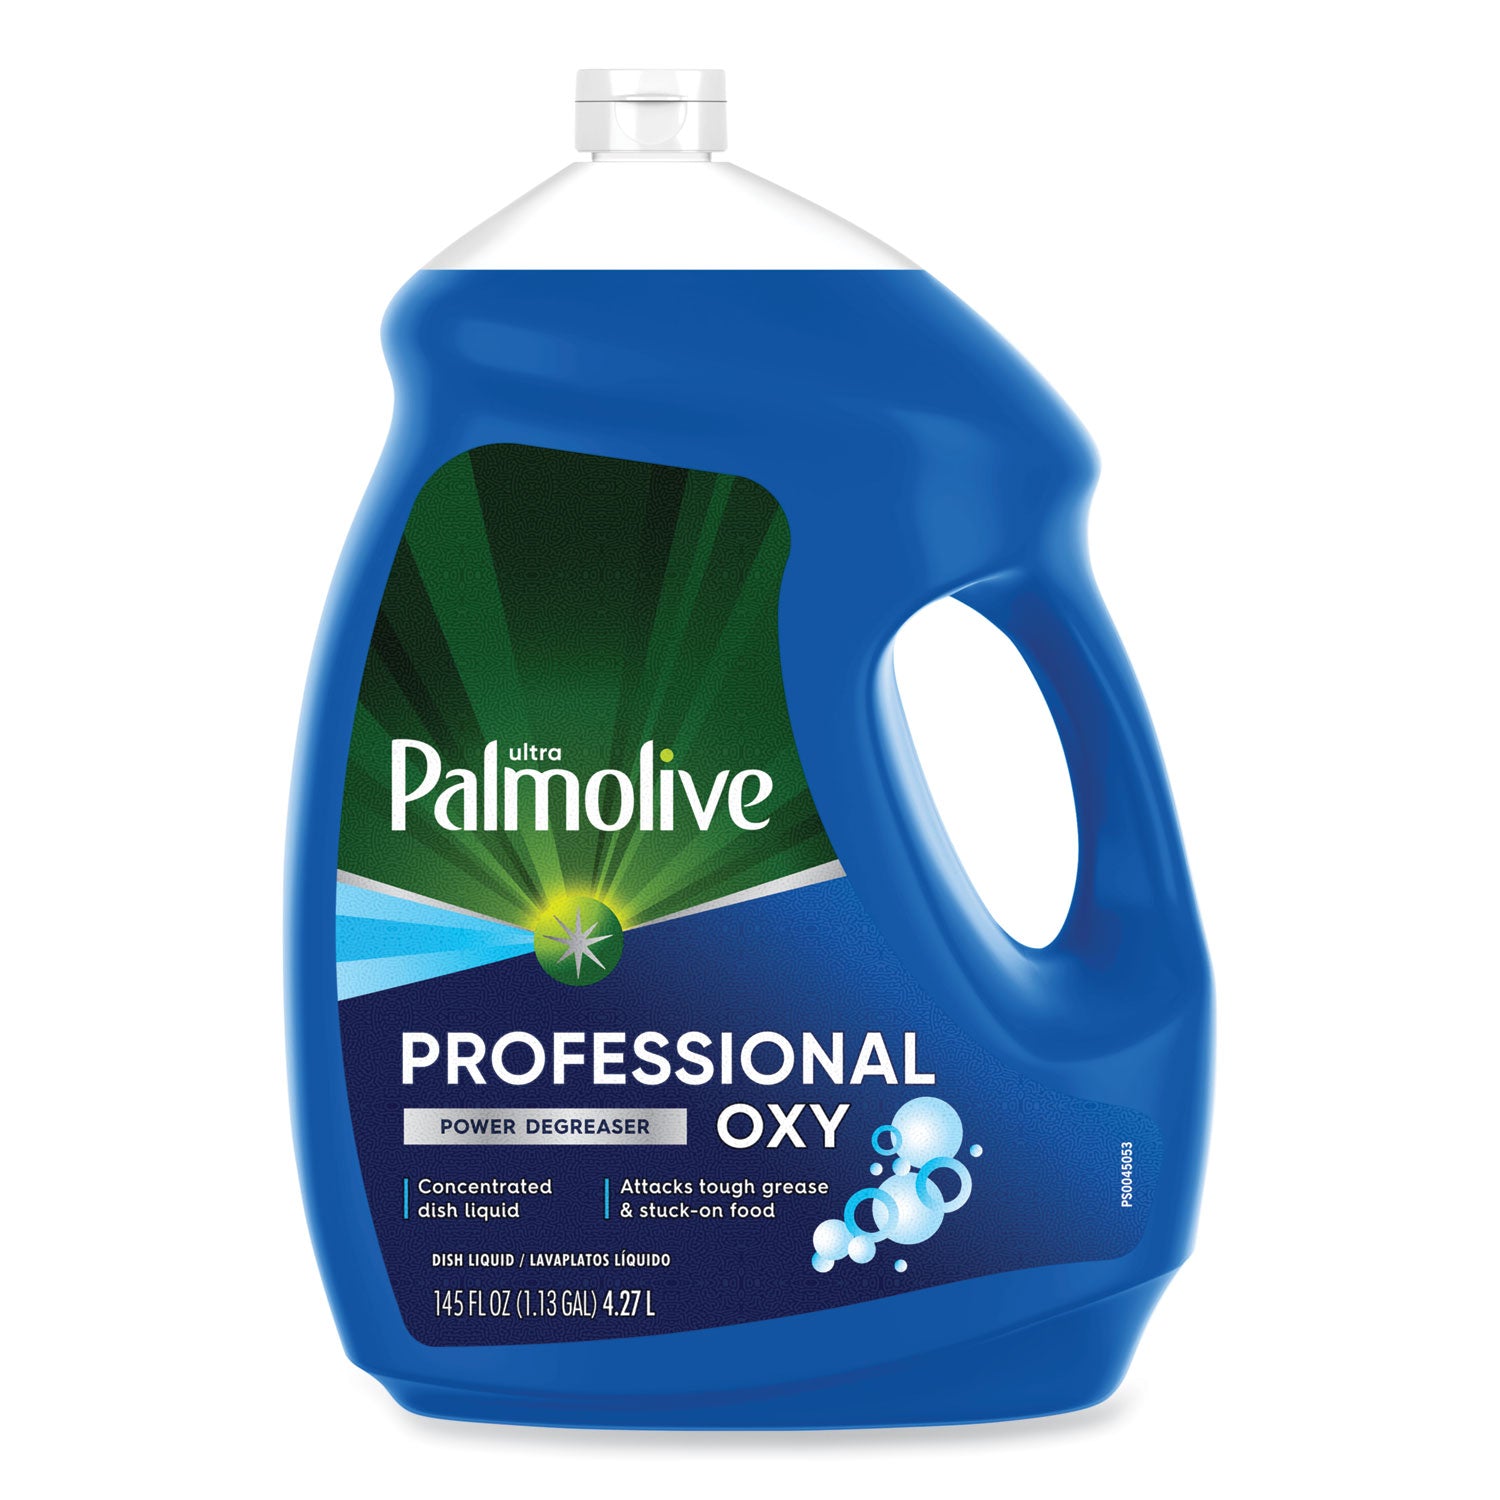 professional-oxy-power-degreaser-liquid-dish-soap-fresh-scent-145-oz-bottle-4-carton_cpc61034143ct - 1